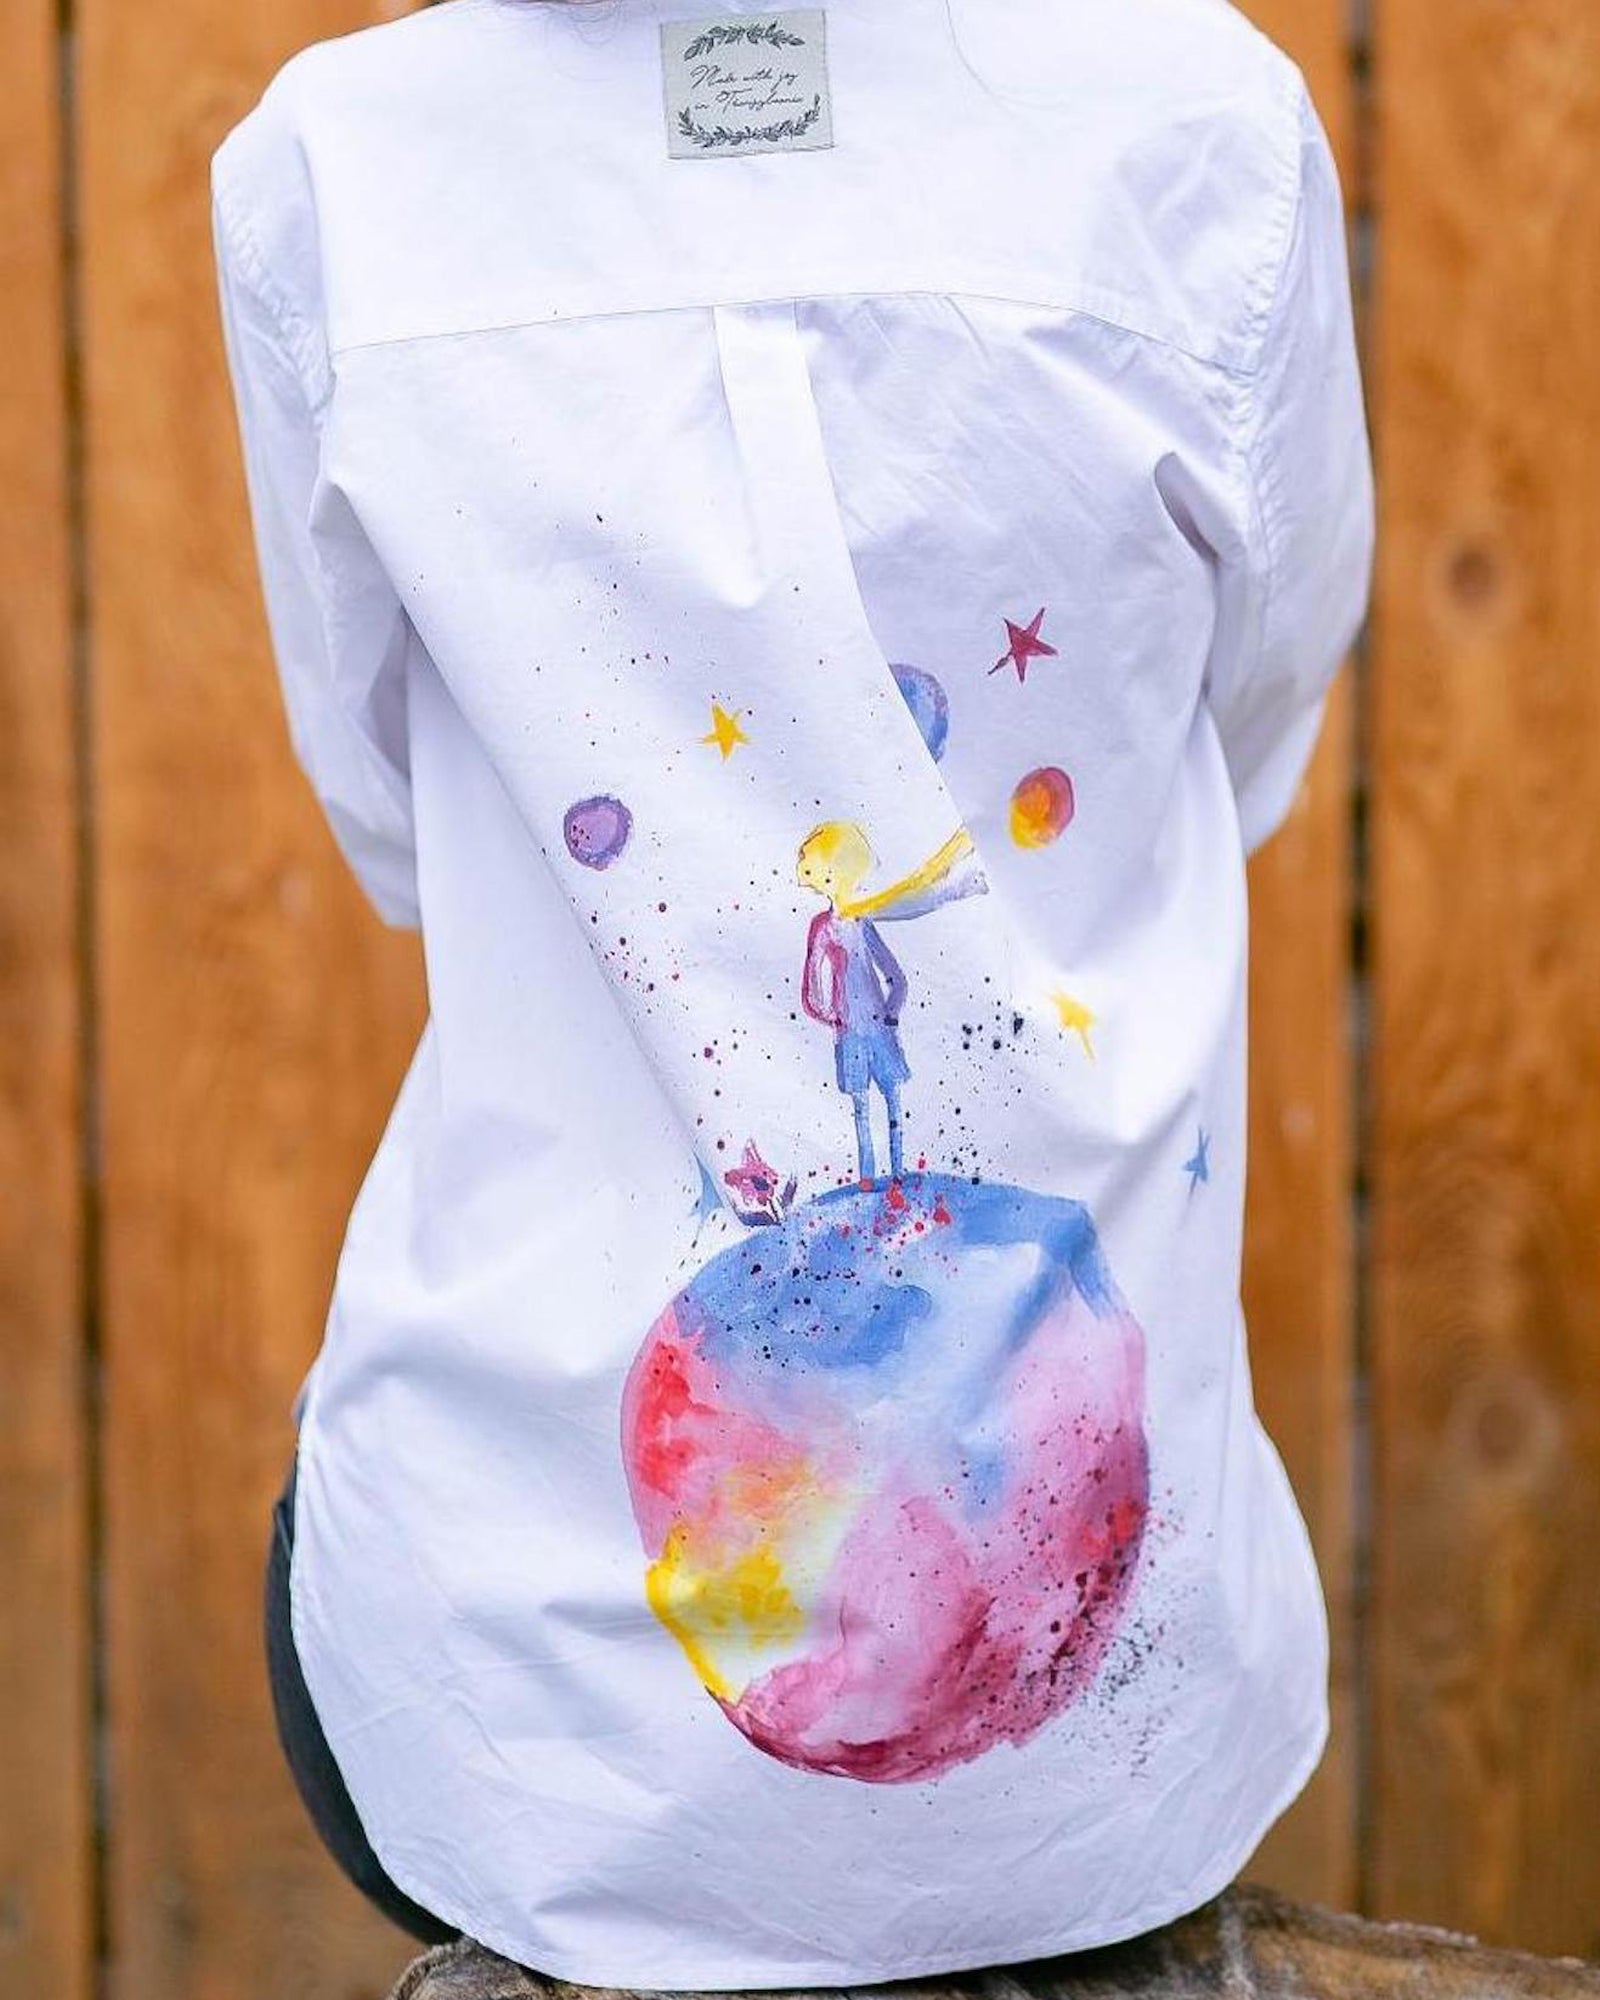 "Little Prince" Hand Painted Women's Shirt